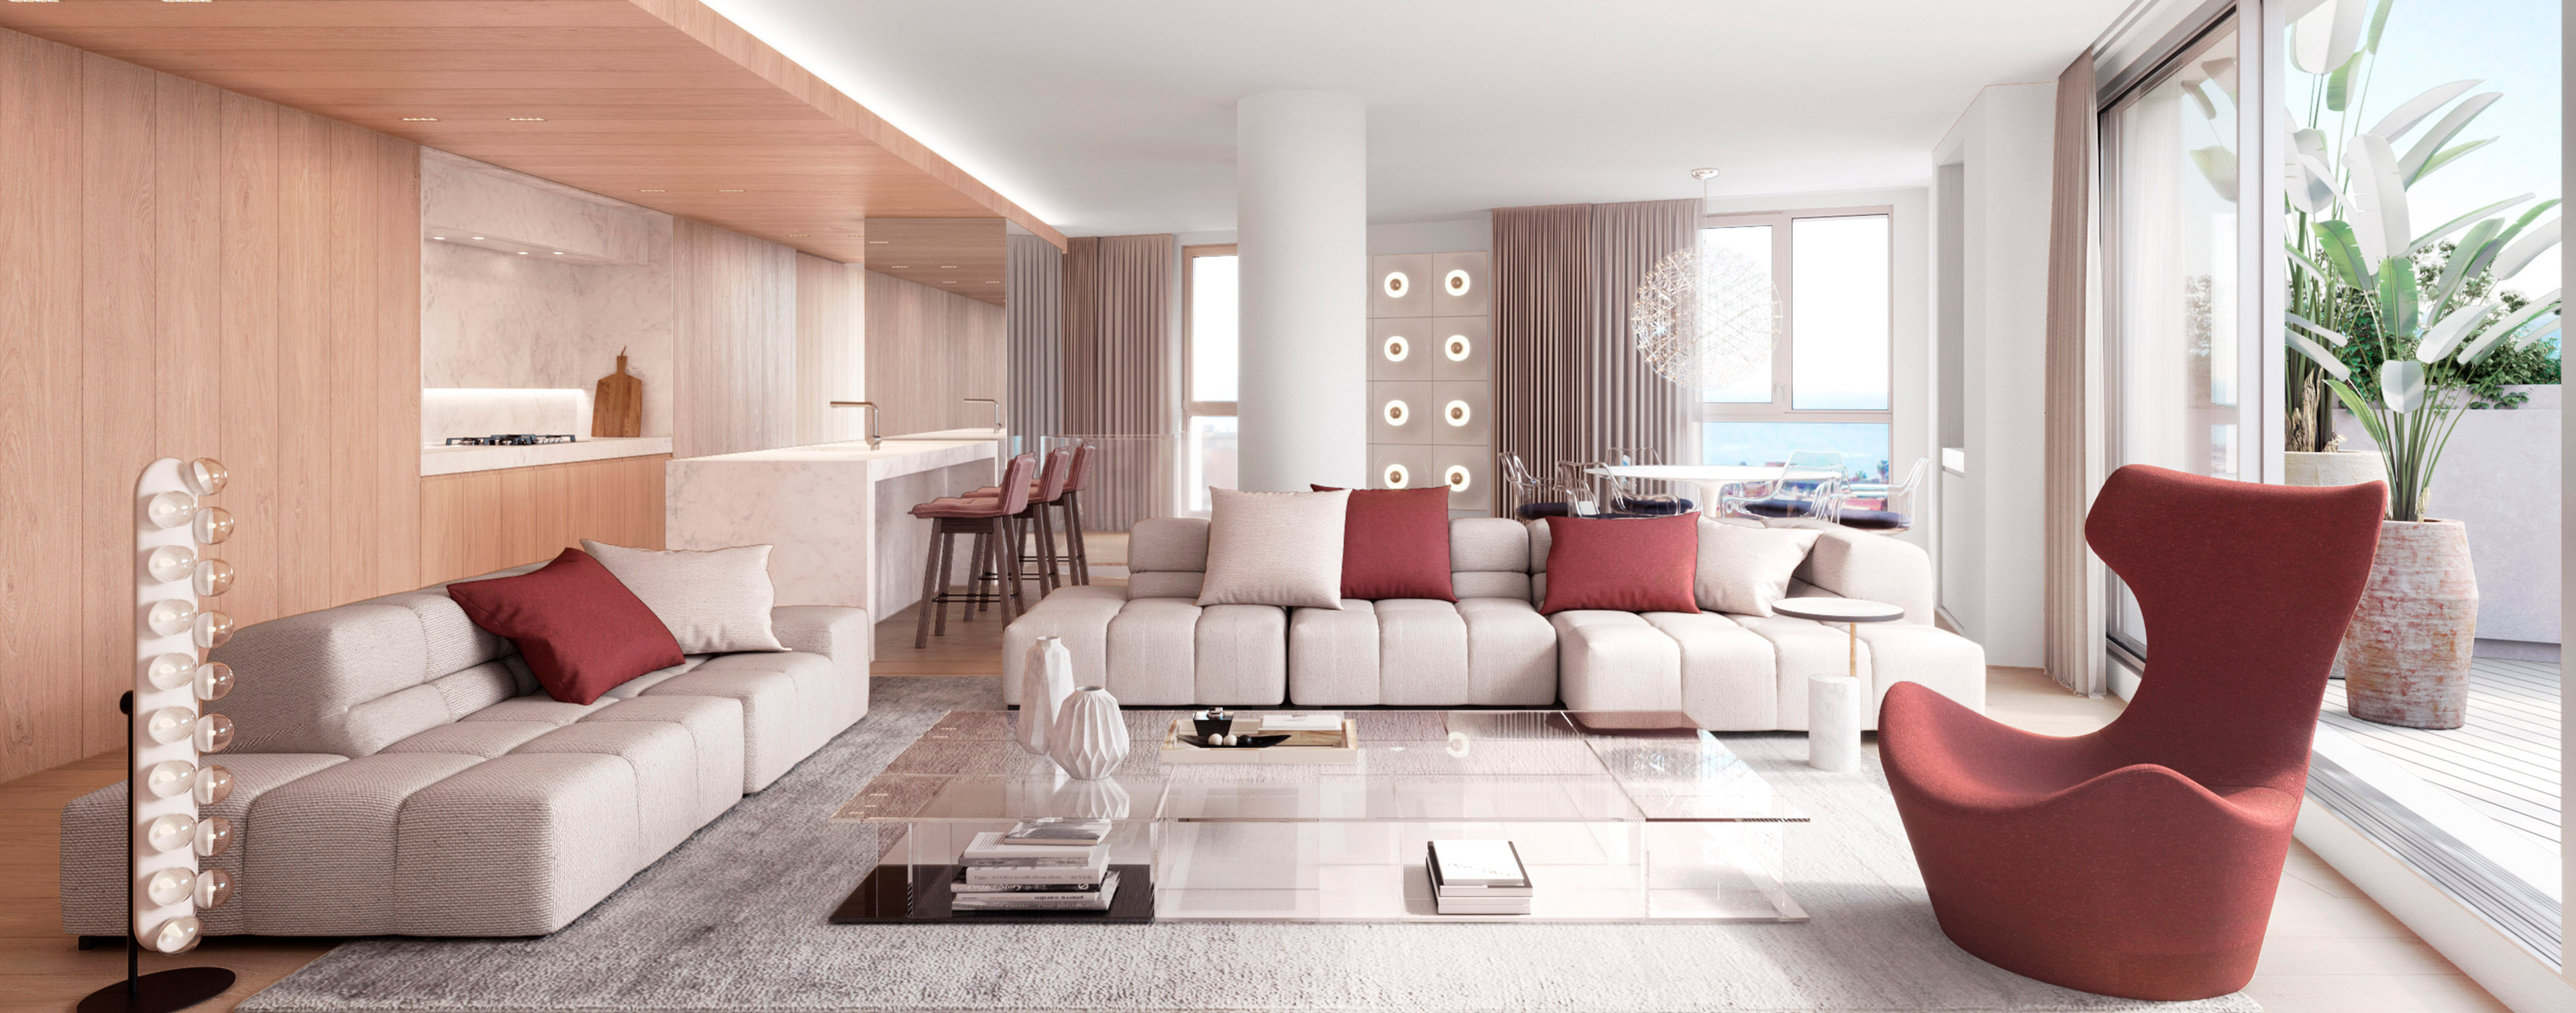 luv studio luxury architects barcelona dr aiguader penthouse IMG 01 - LUV Studio - Architecture & Design - Barcelona